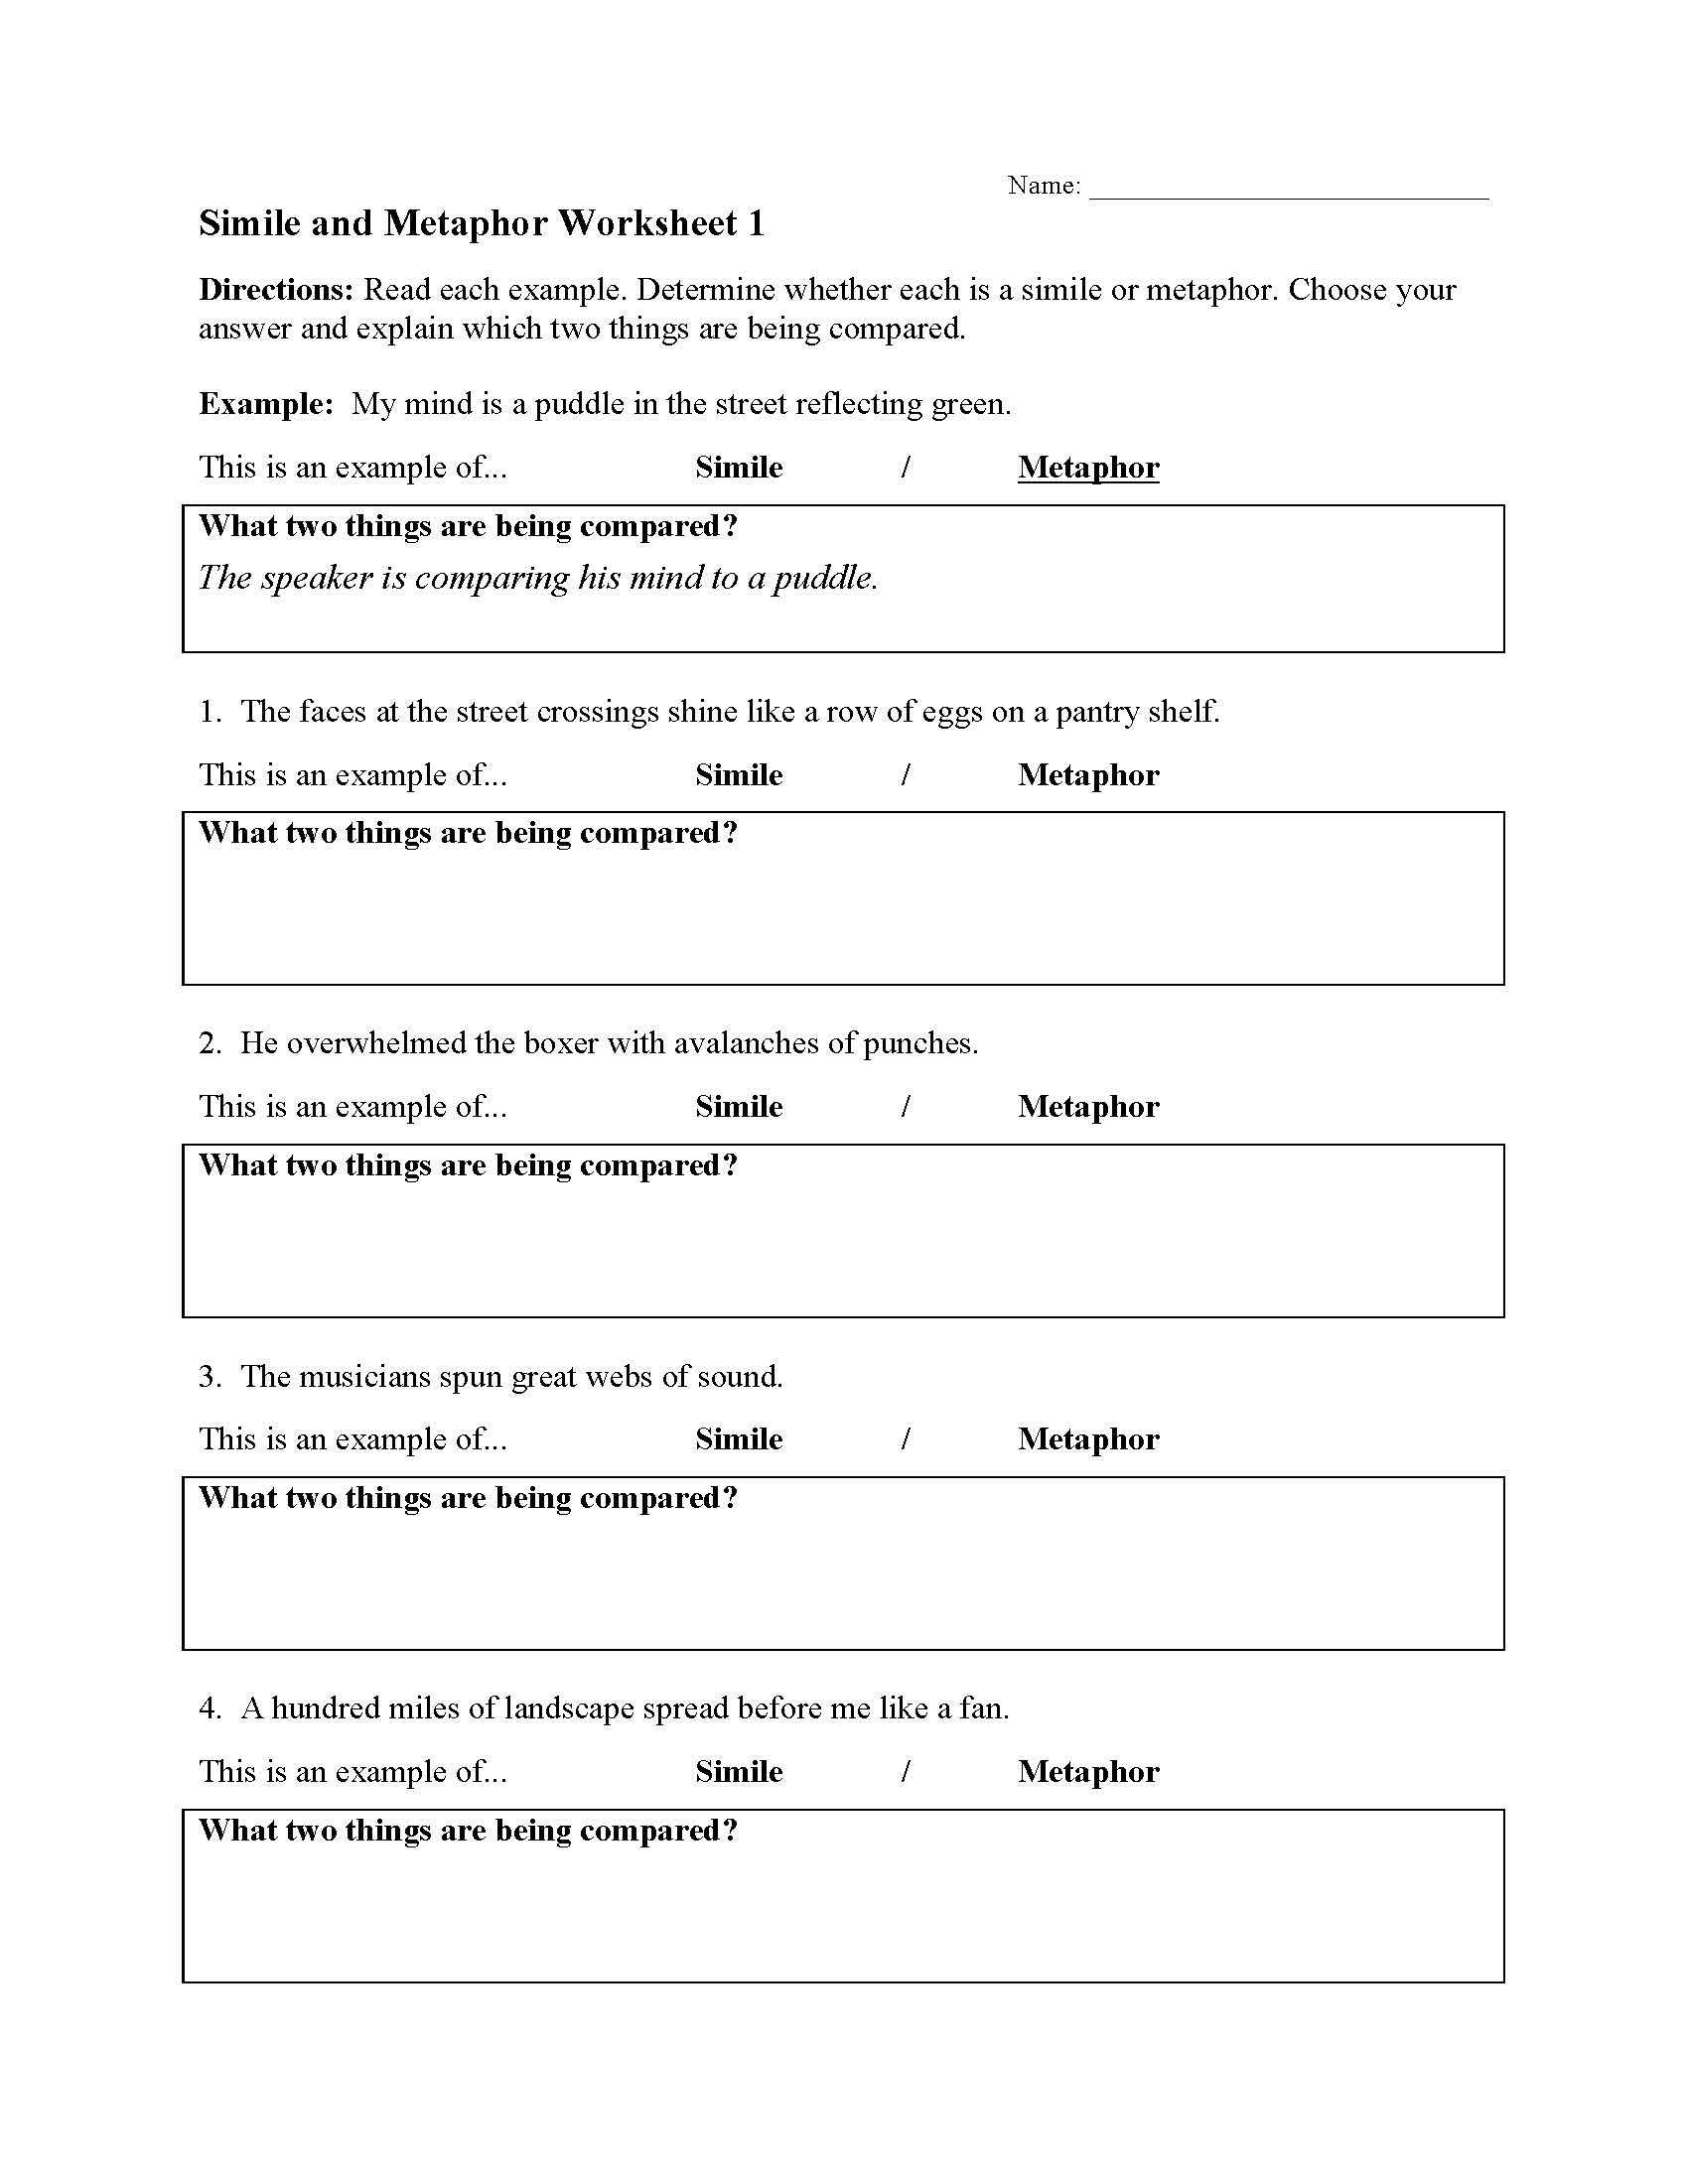 Simile and Metaphor Worksheets  Ereading Worksheets Throughout Simile Metaphor Personification Worksheet